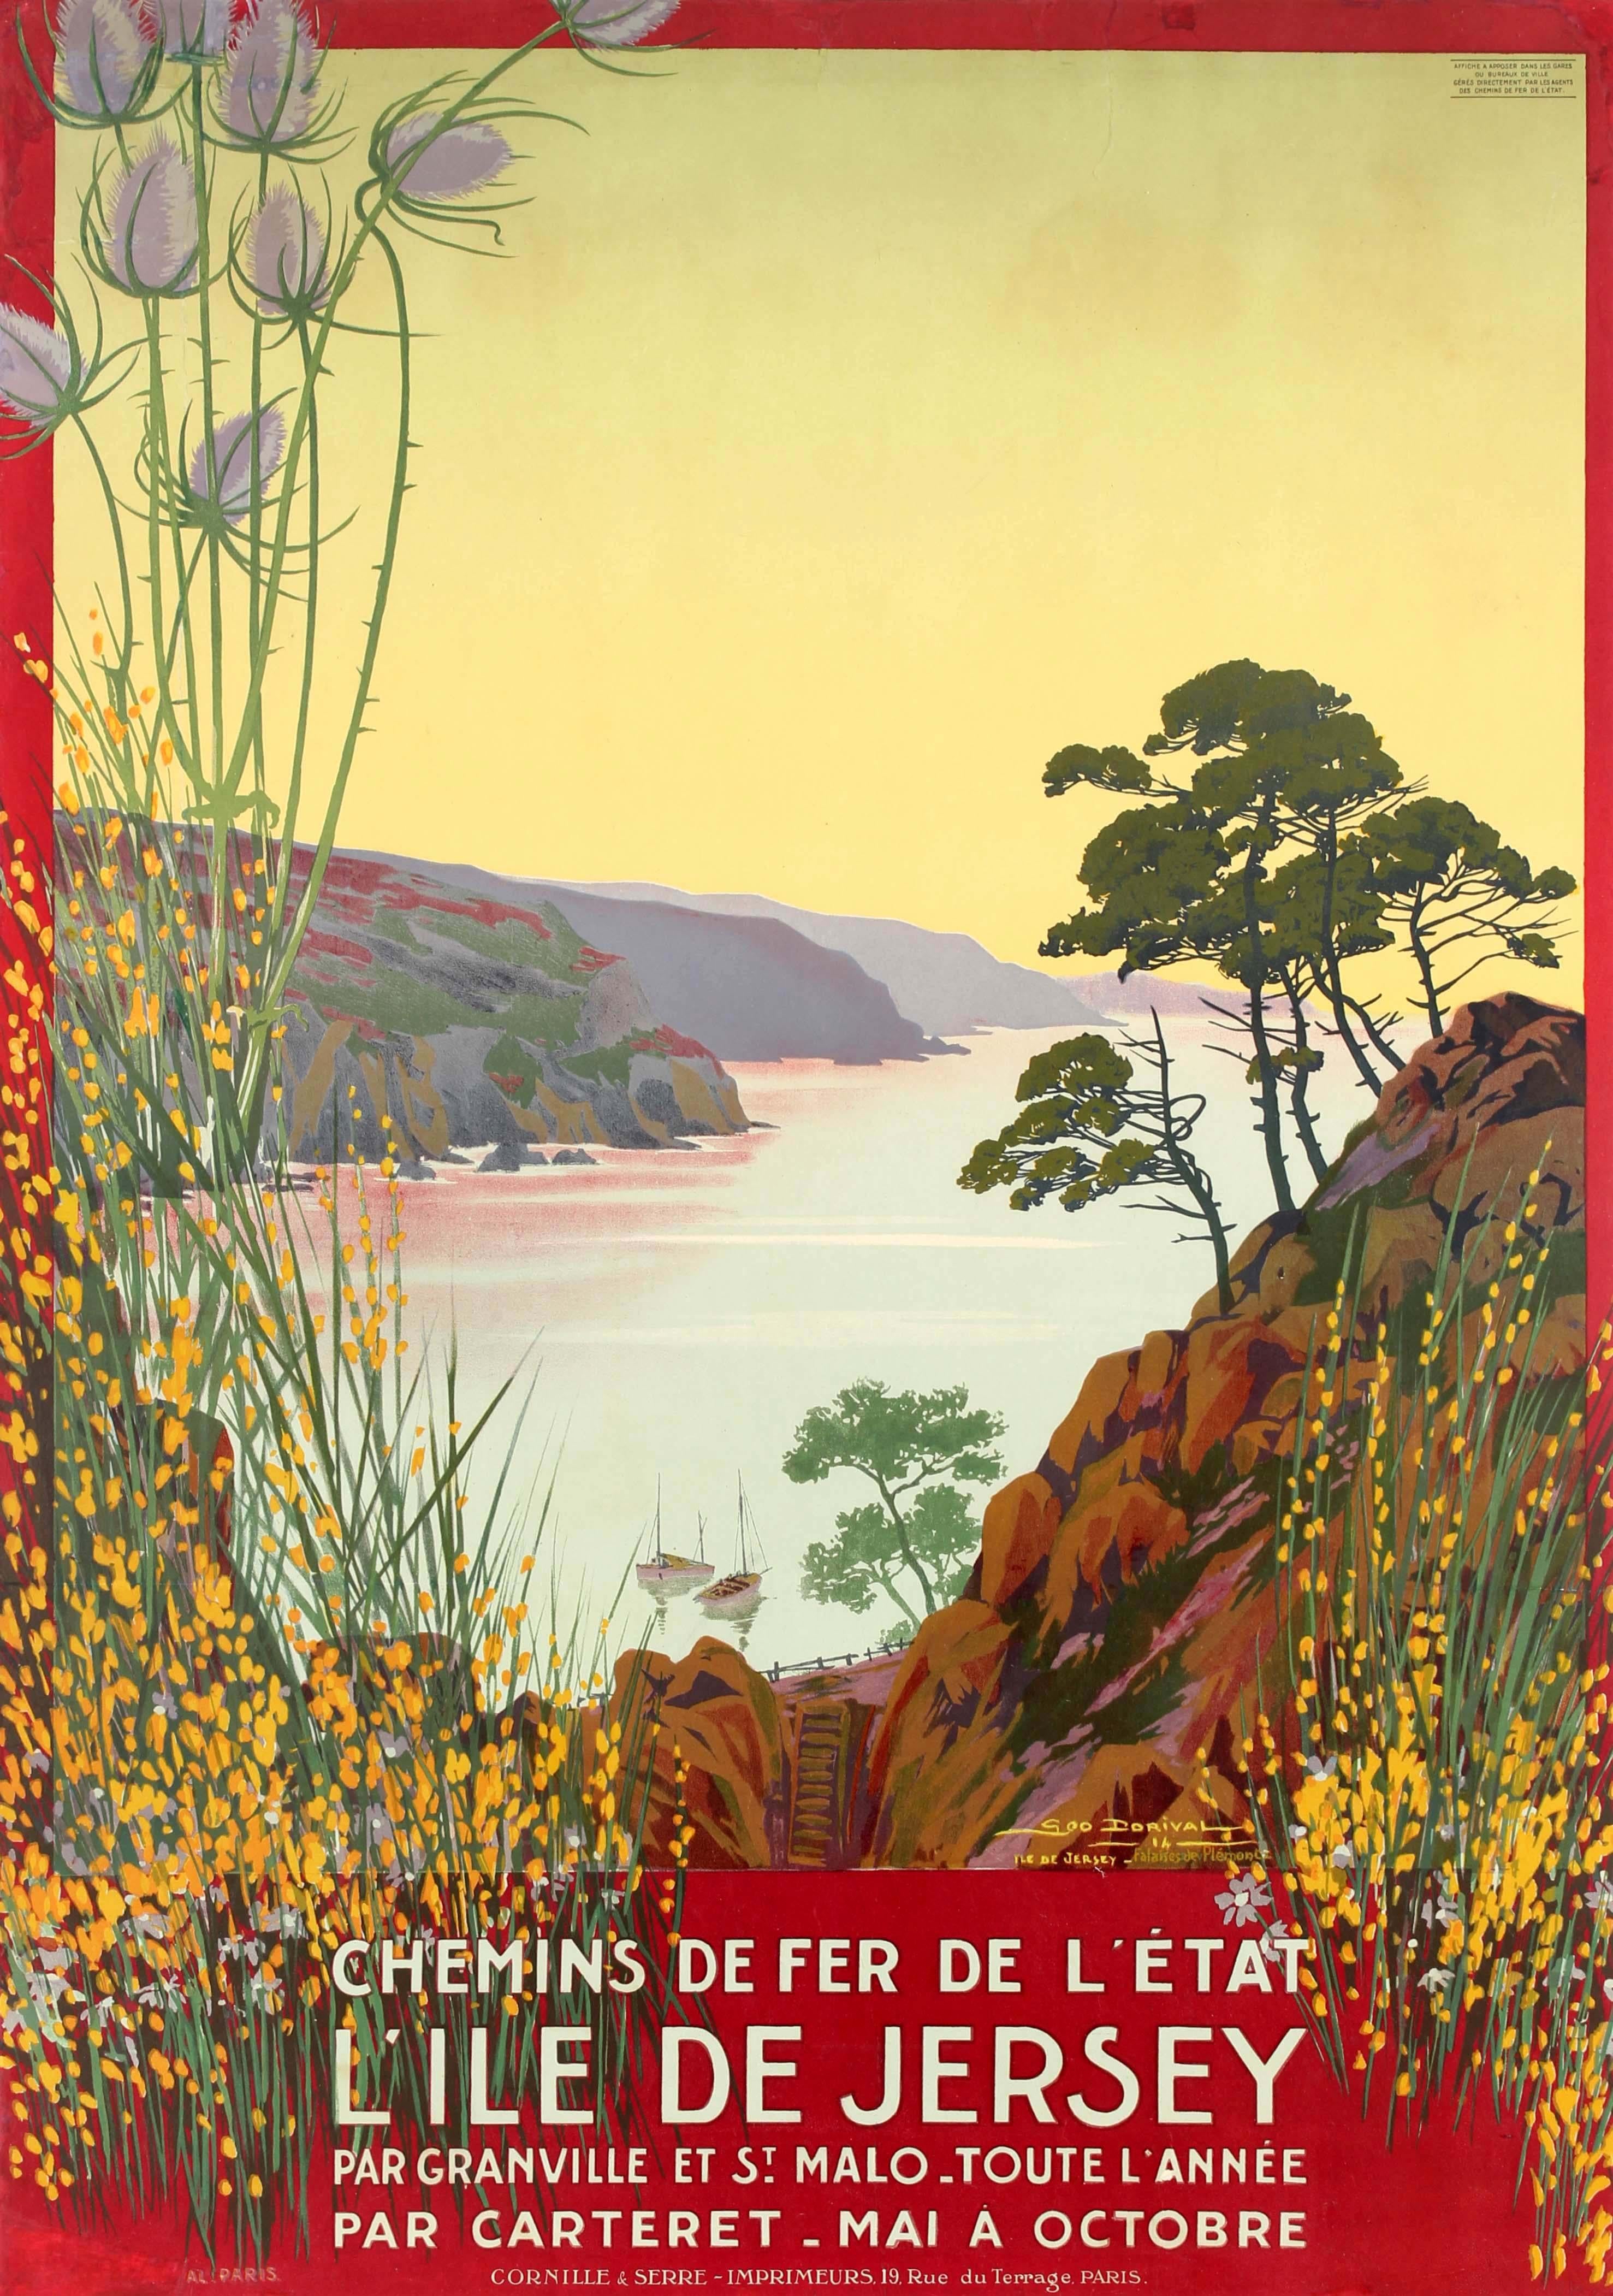 Geo Dorival Print - Original Antique Railway Travel Poster Jersey Island By Chemins De Fer De l'Etat